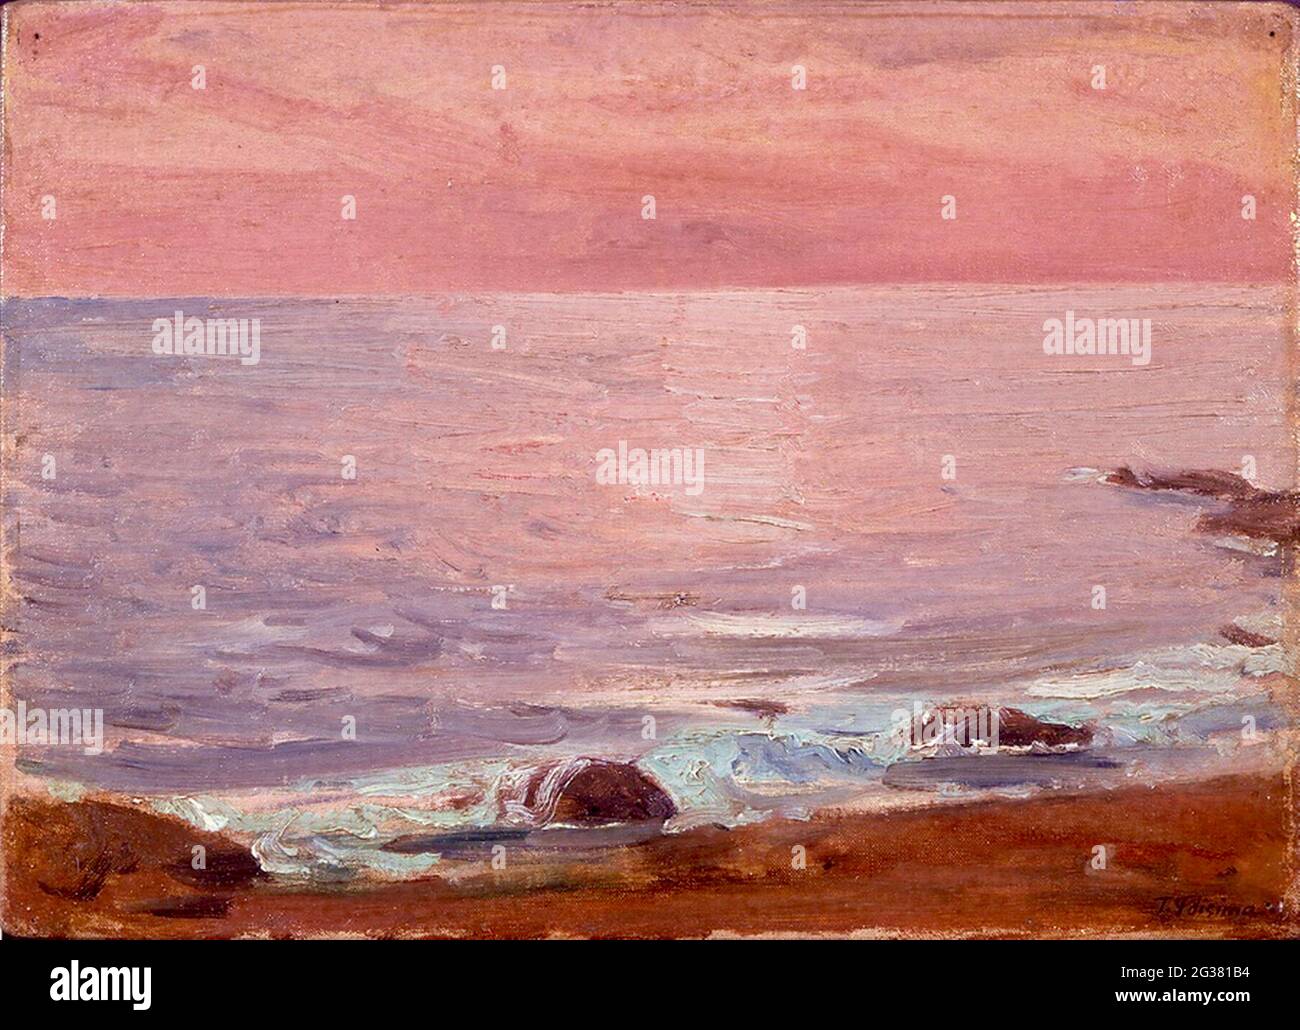 Fujishima Takeji artwork entitled The Sea at Sunrise - 1931. Stock Photo